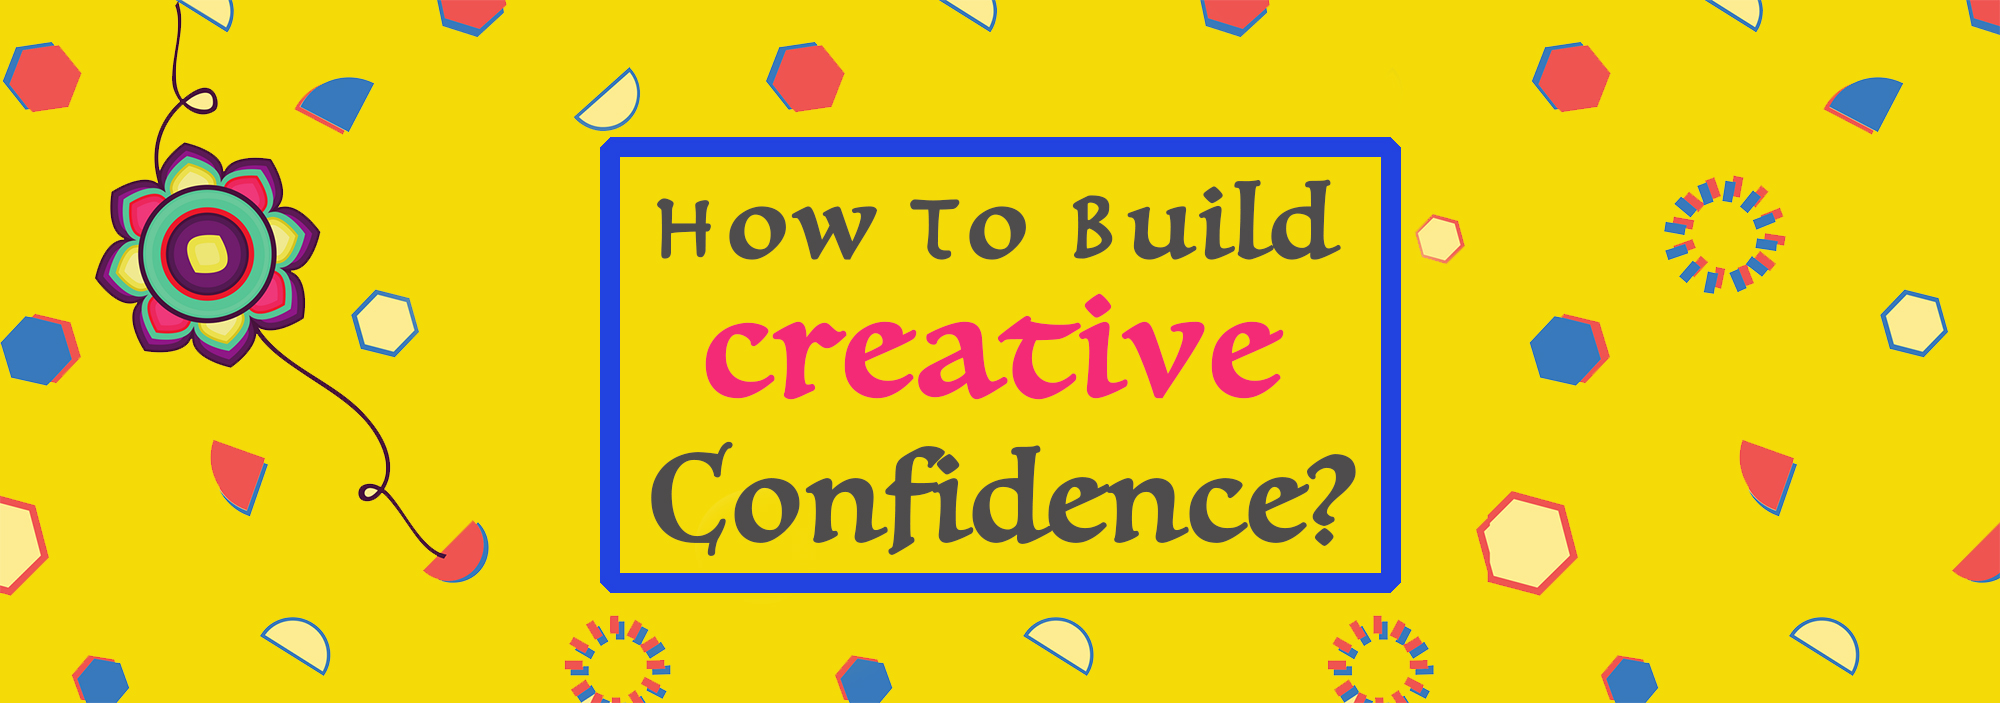 Building Creative Confidence